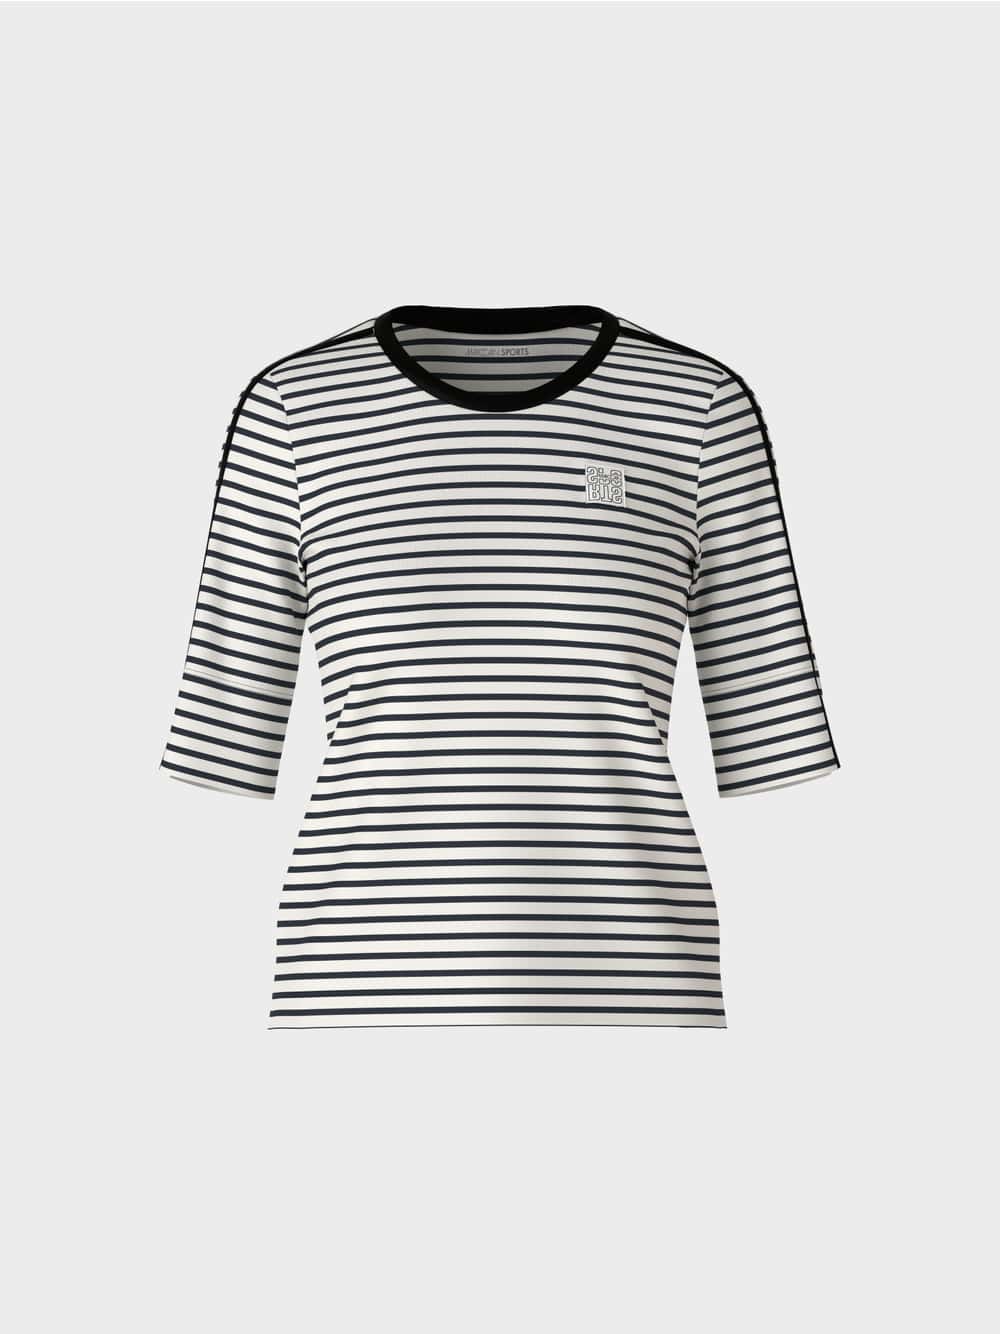 white & black narrow striped T-shirt